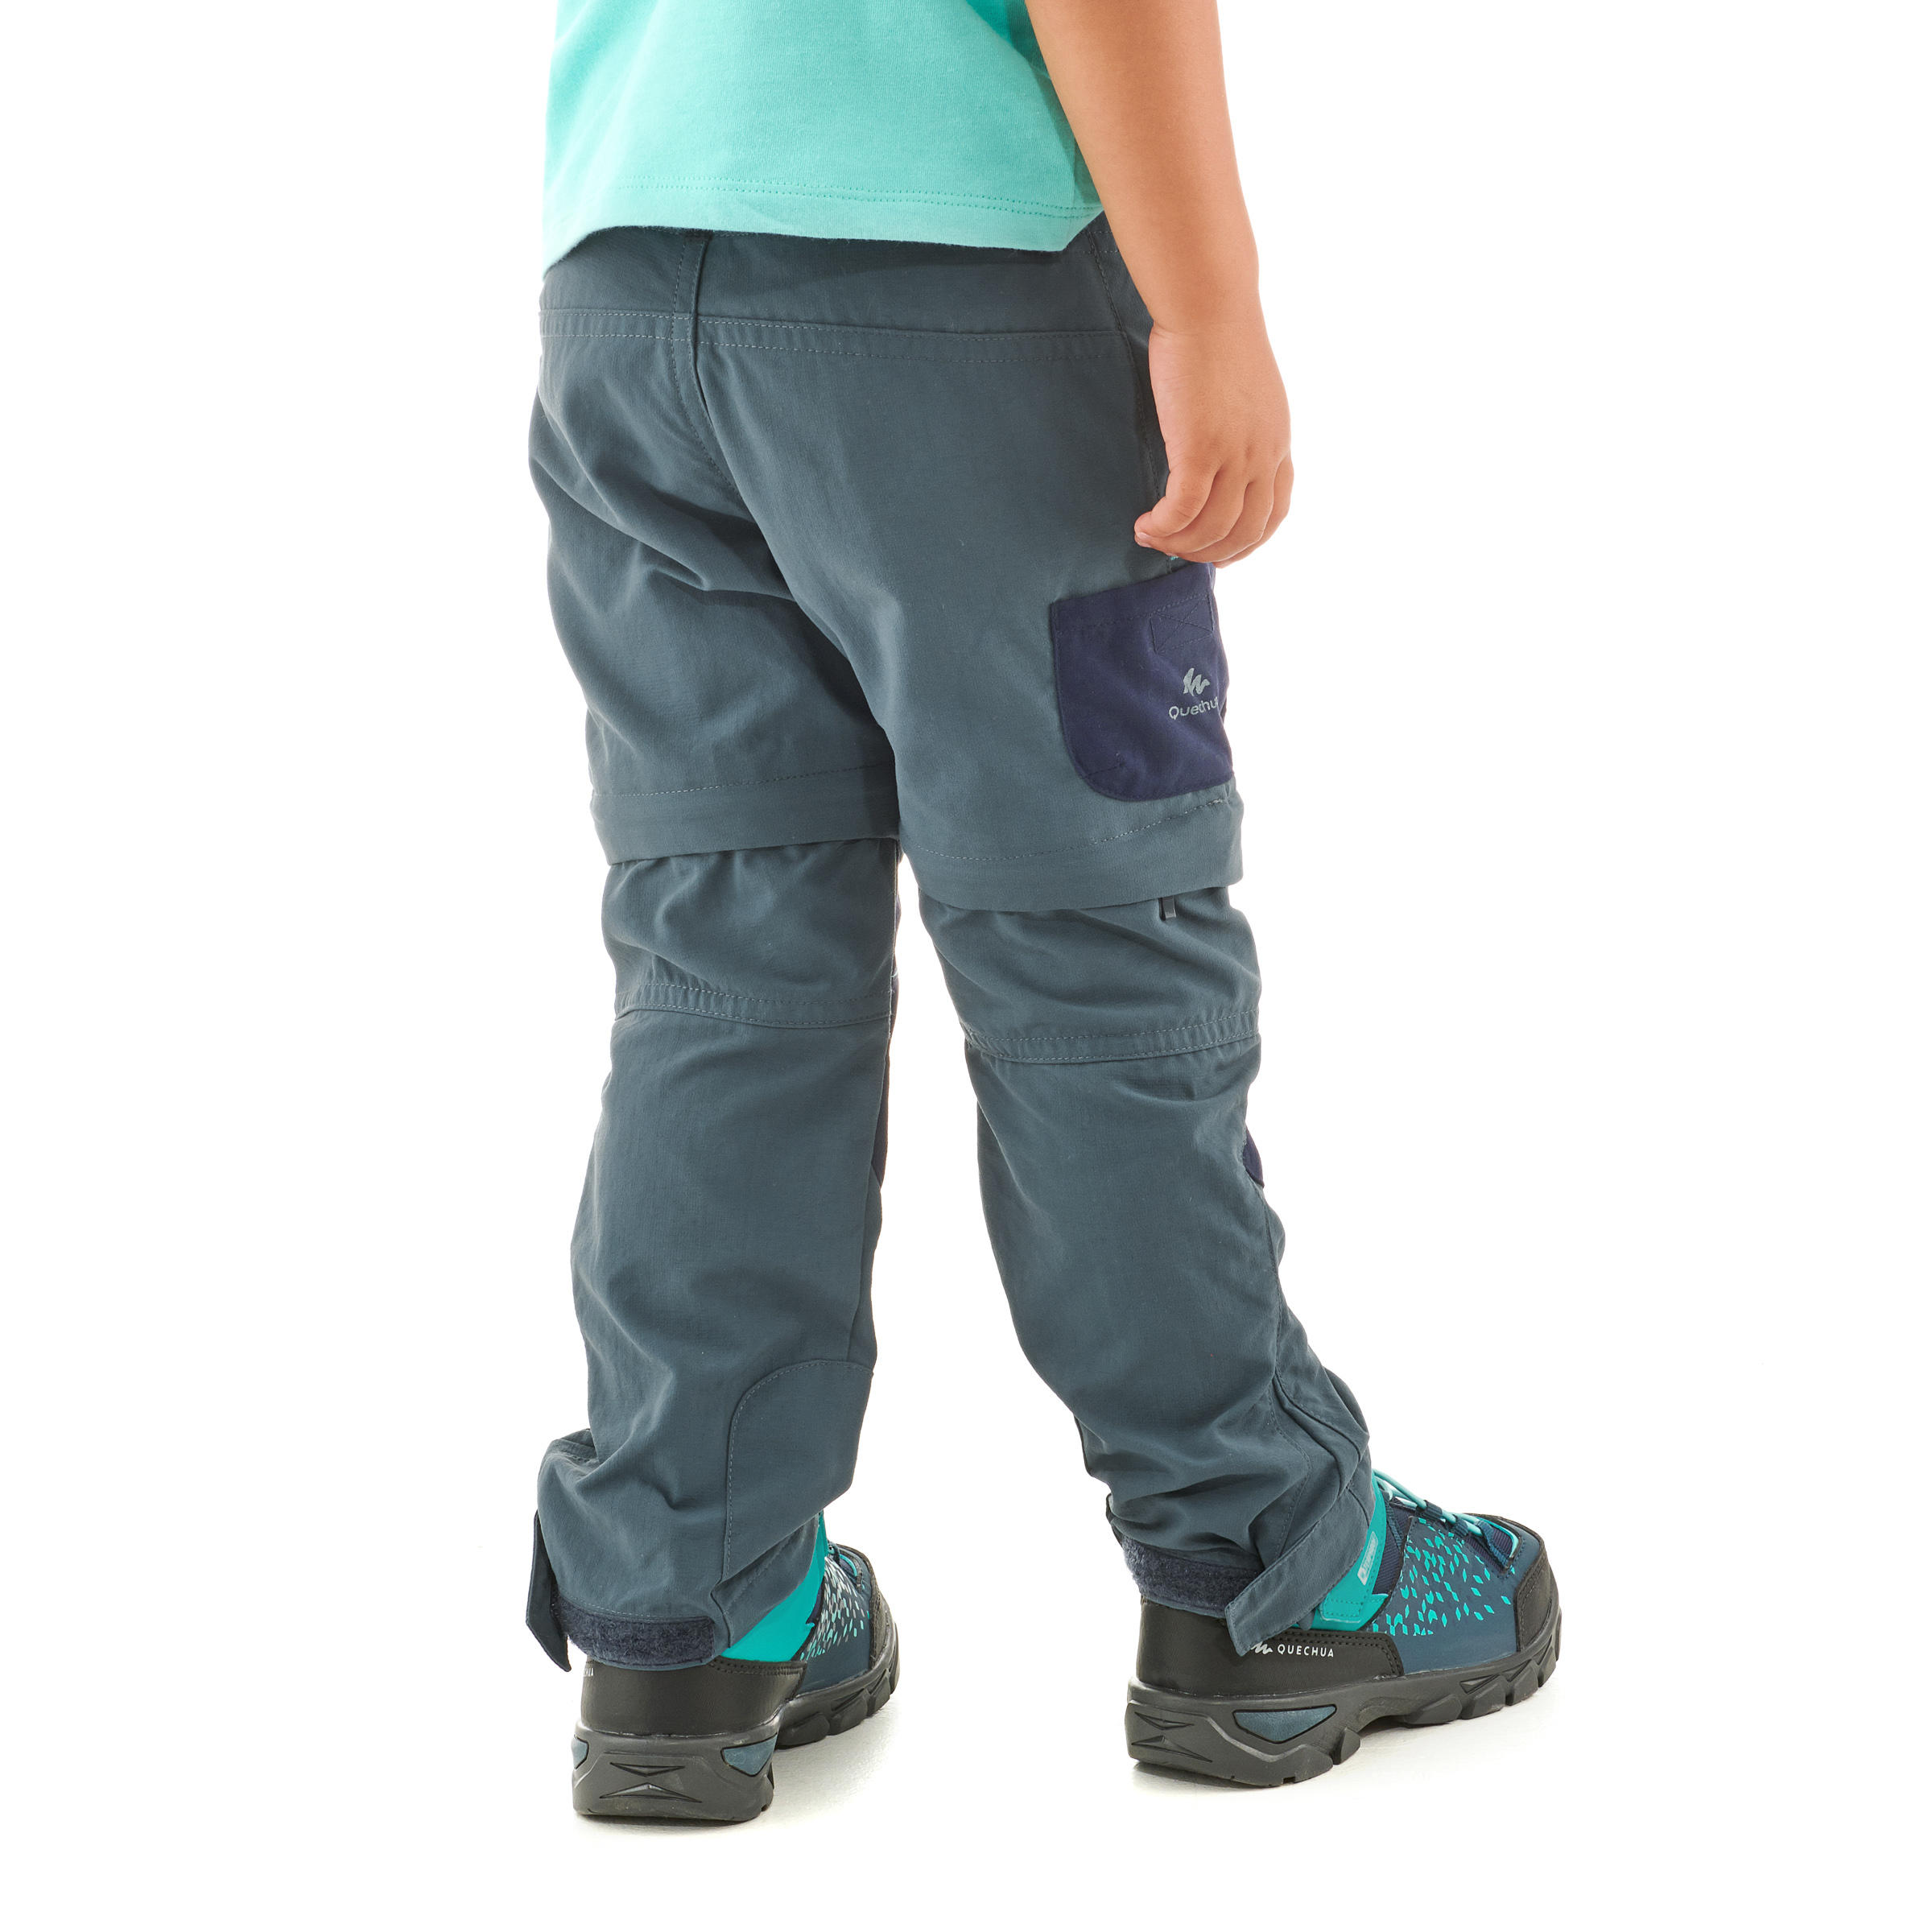 Kids’ Convertible Hiking Pants - MH 500 Grey/Blue - QUECHUA